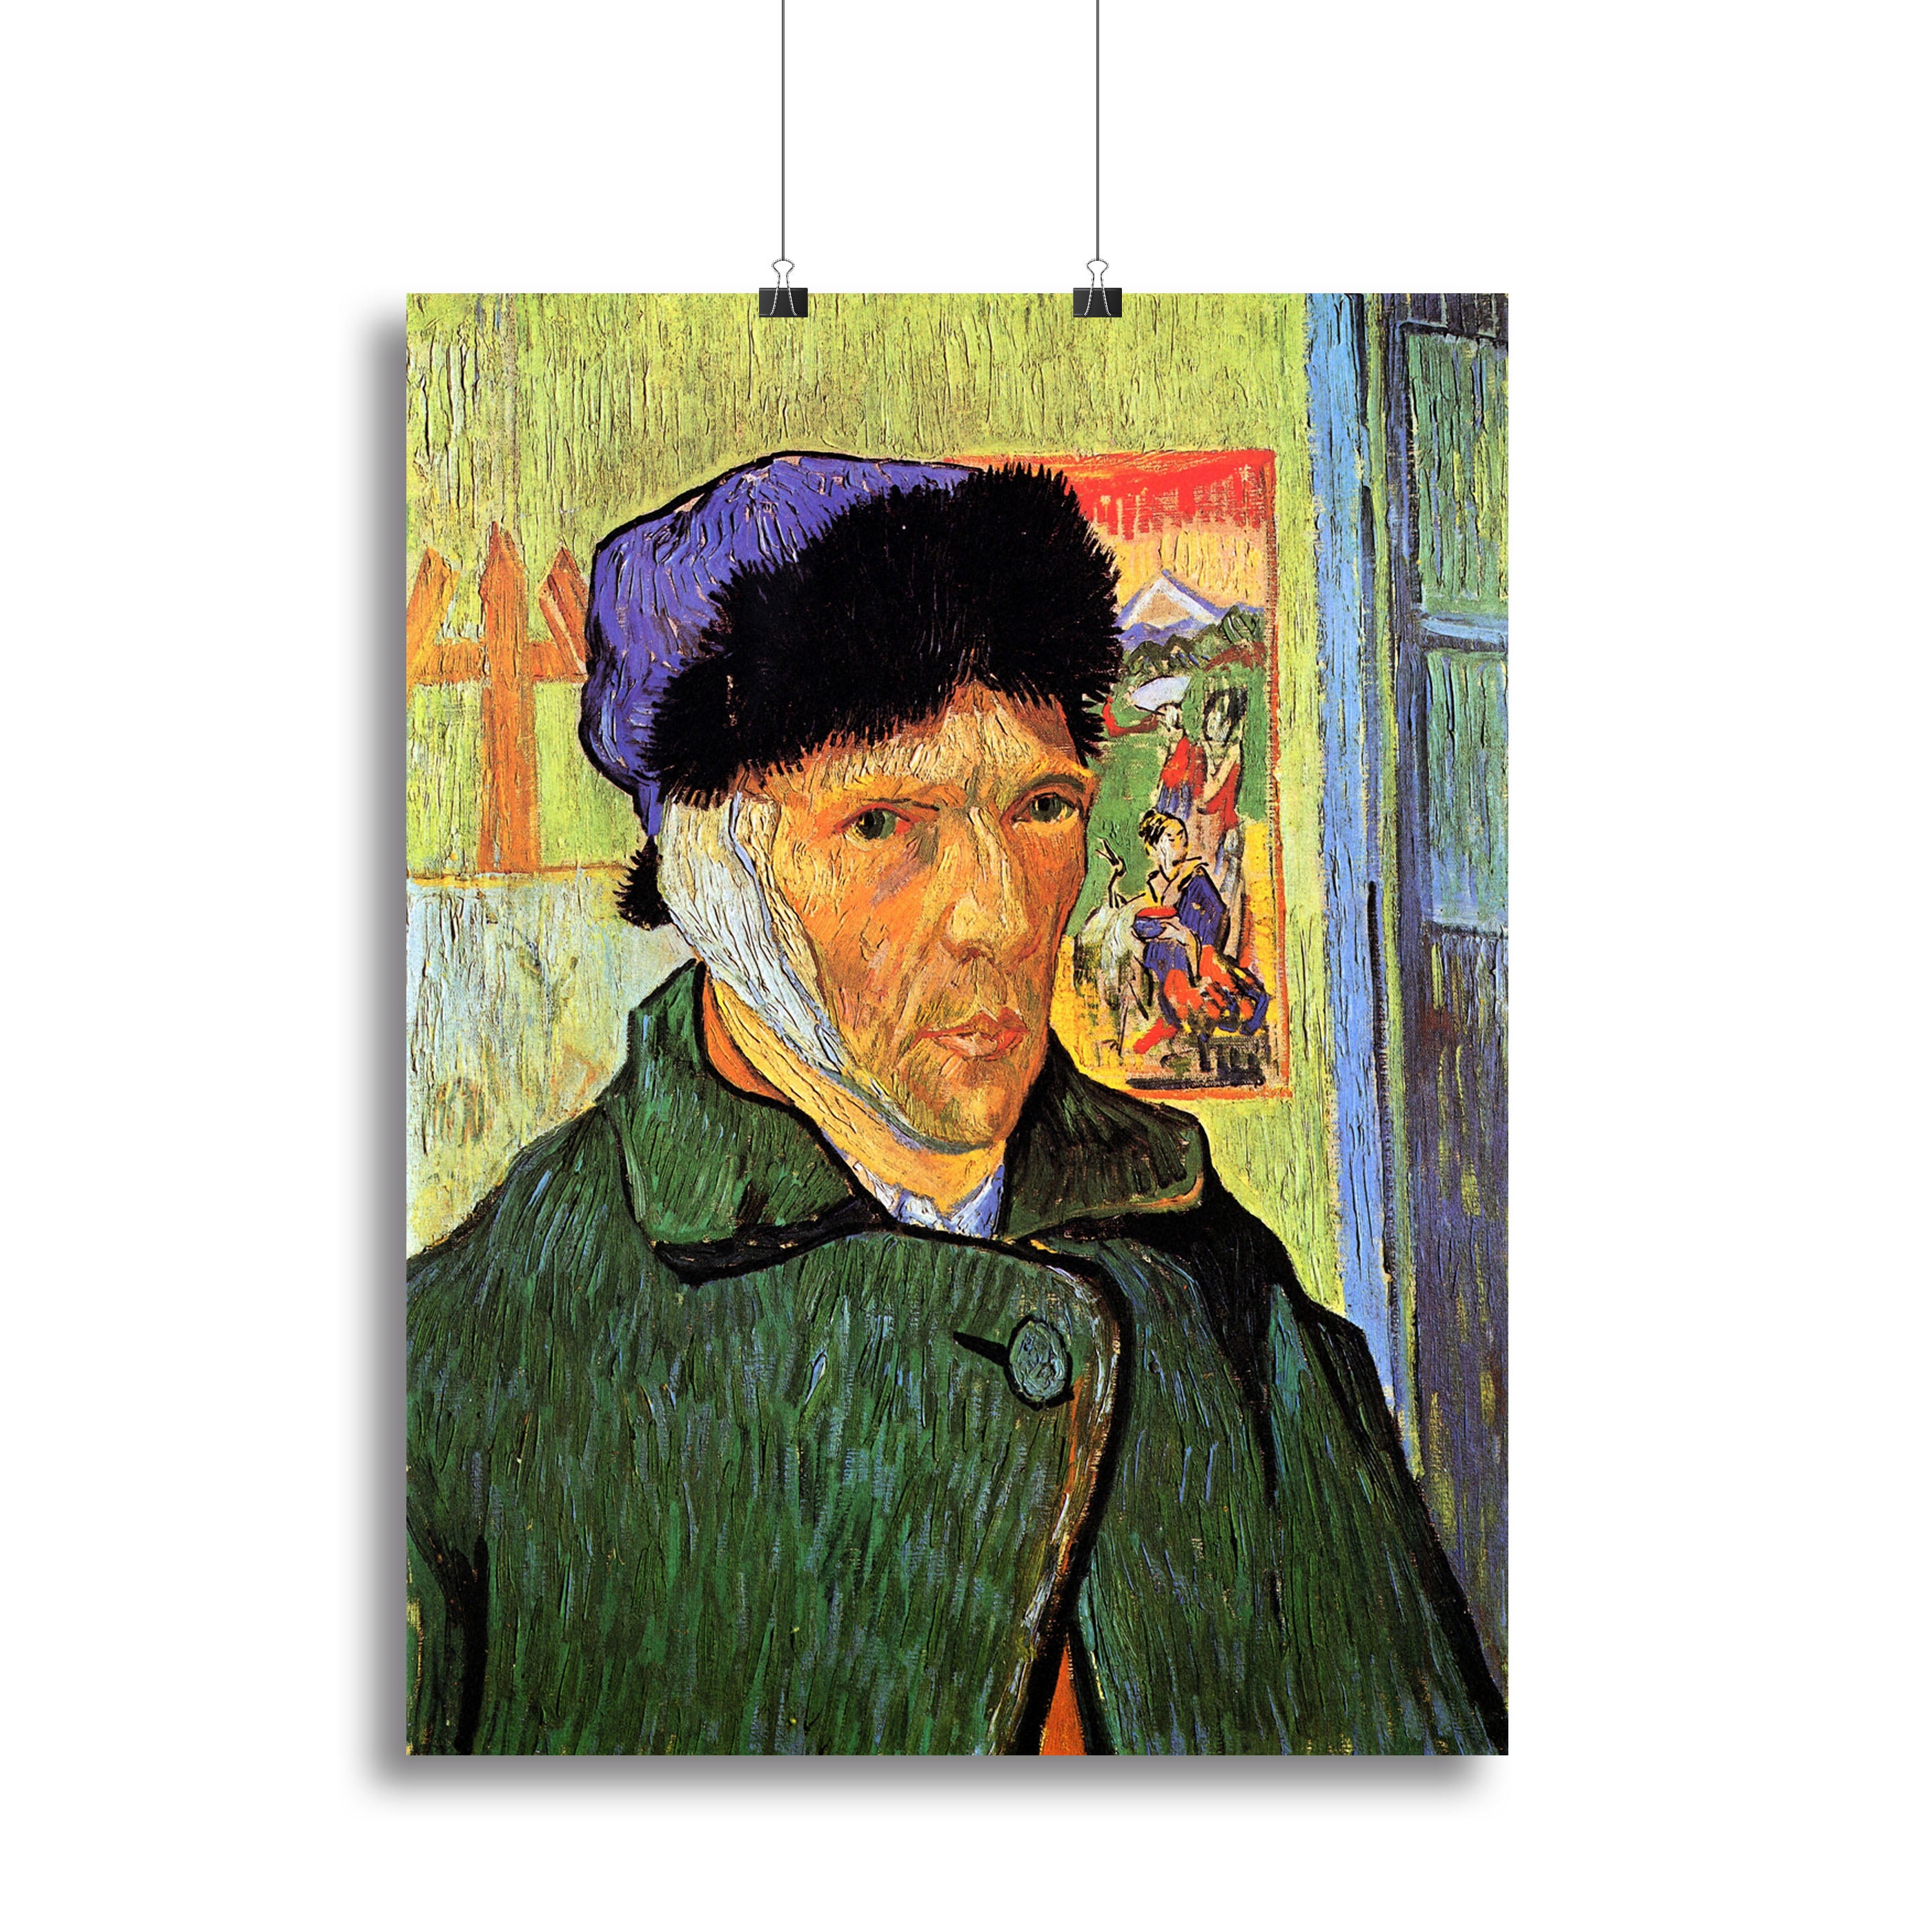 Self-Portrait 11 by Van Gogh Canvas Print or Poster - Canvas Art Rocks - 2